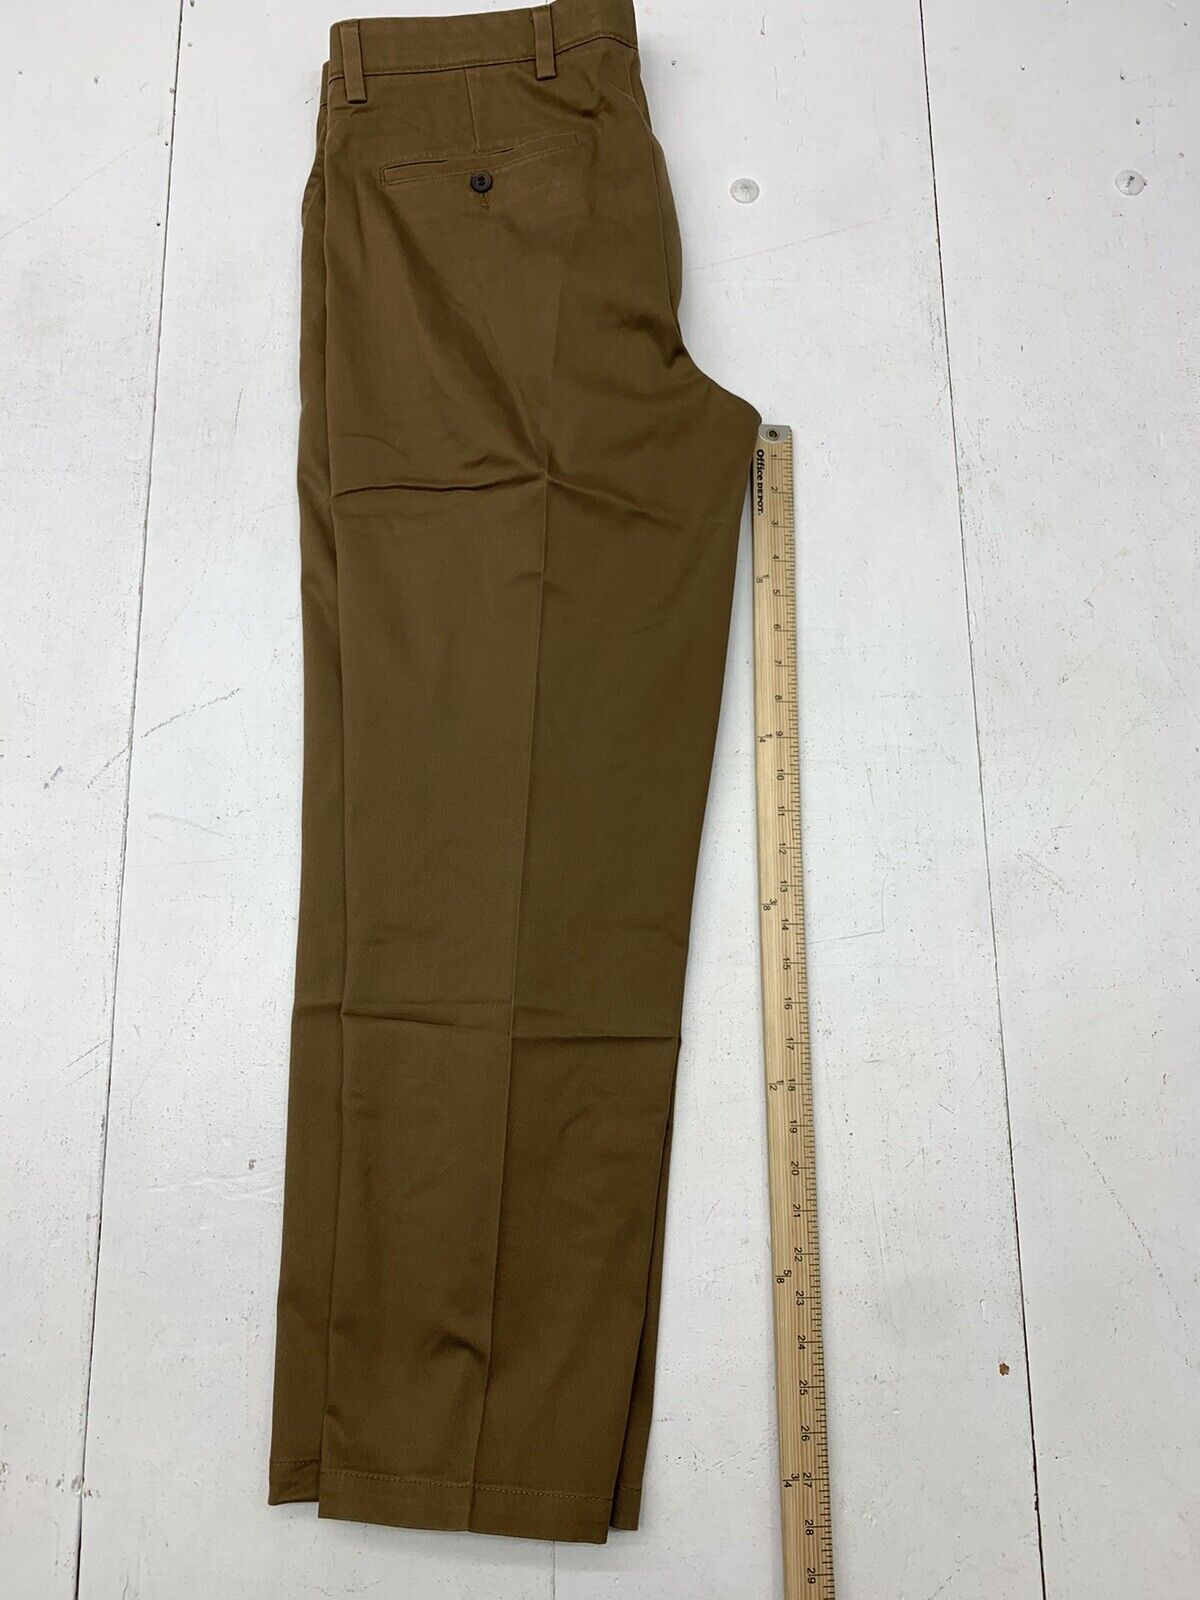 Dockers Mens Classic Fit Brown Dress Pants Size 36/29 - beyond